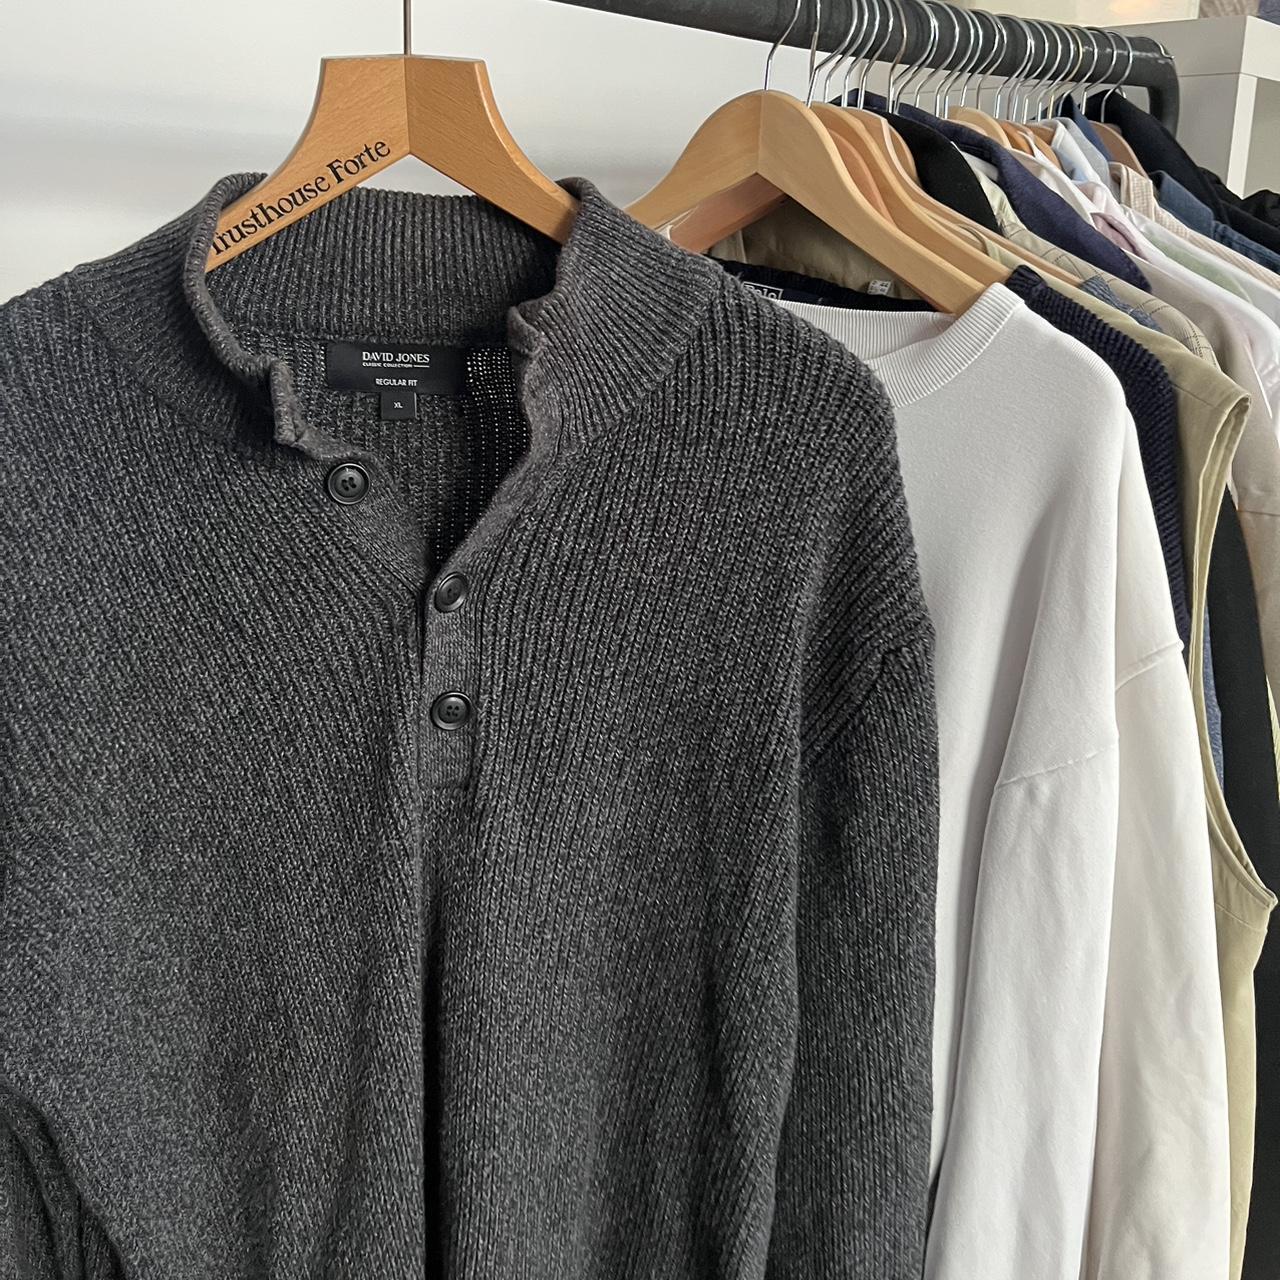 David Jones knitted sweatshirt Colour: Grey Size:... - Depop